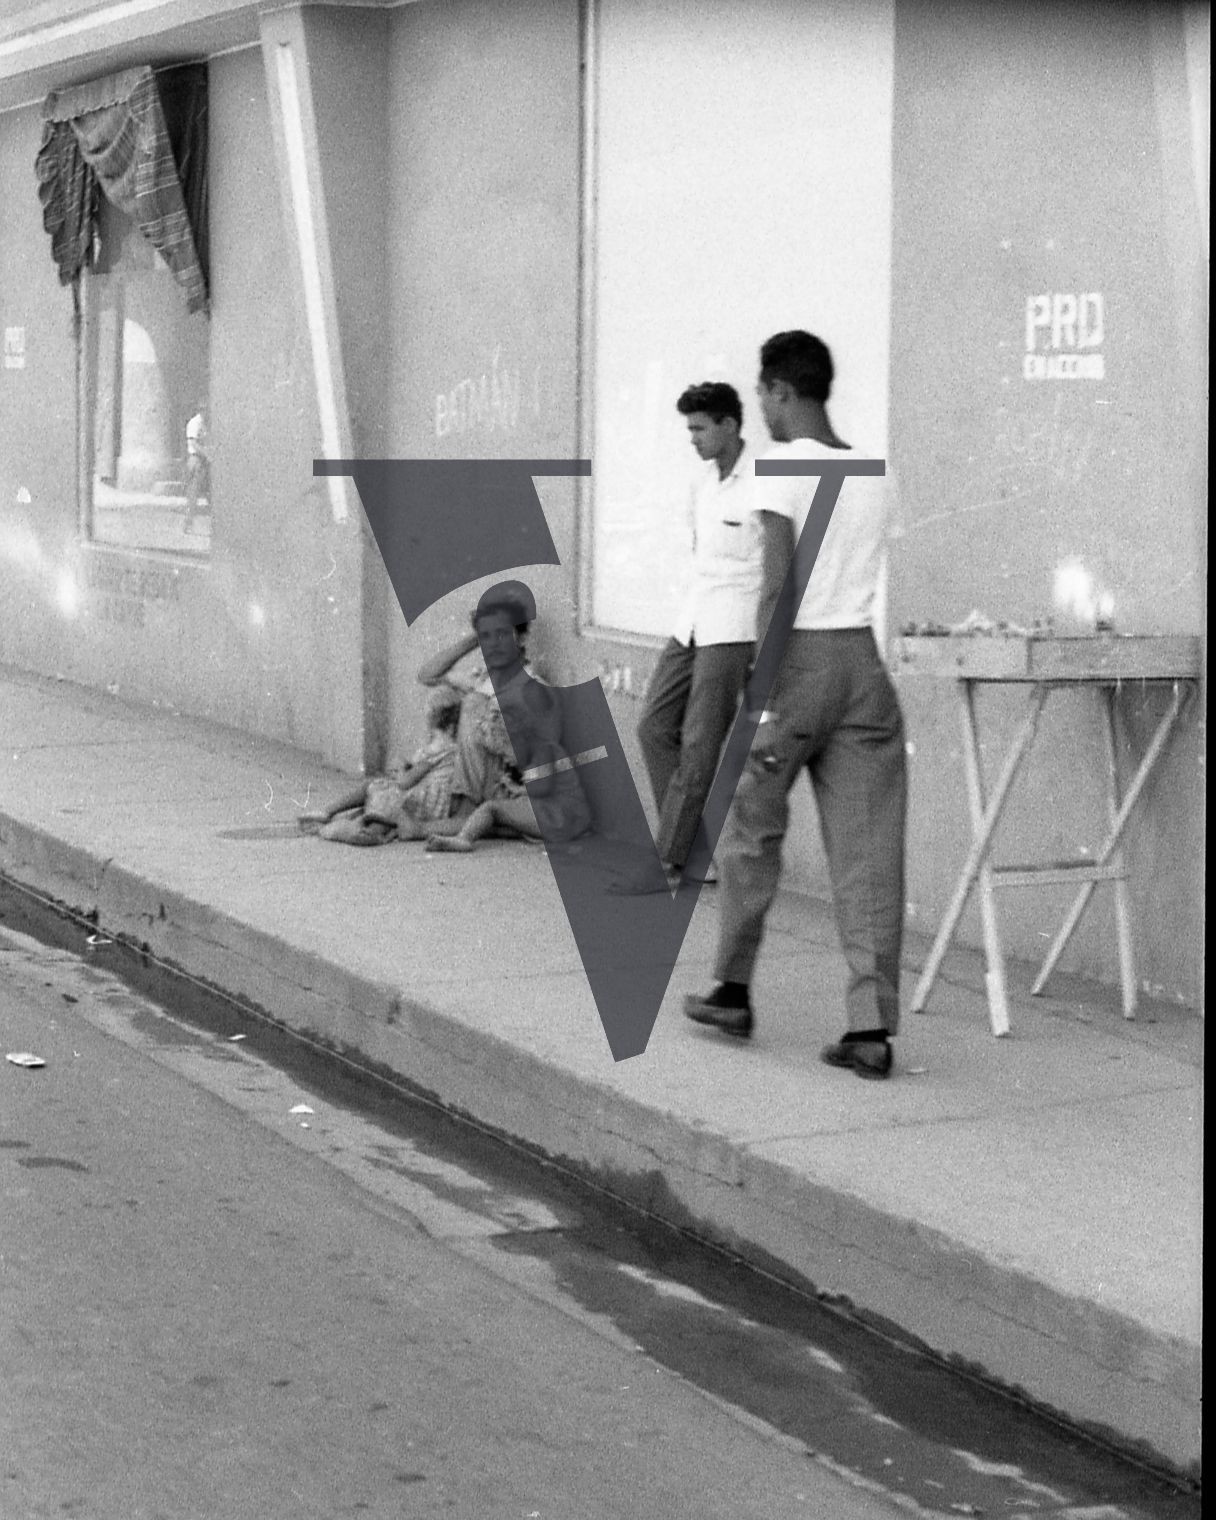 Dominican Republic, street scene, beggar, PRD.